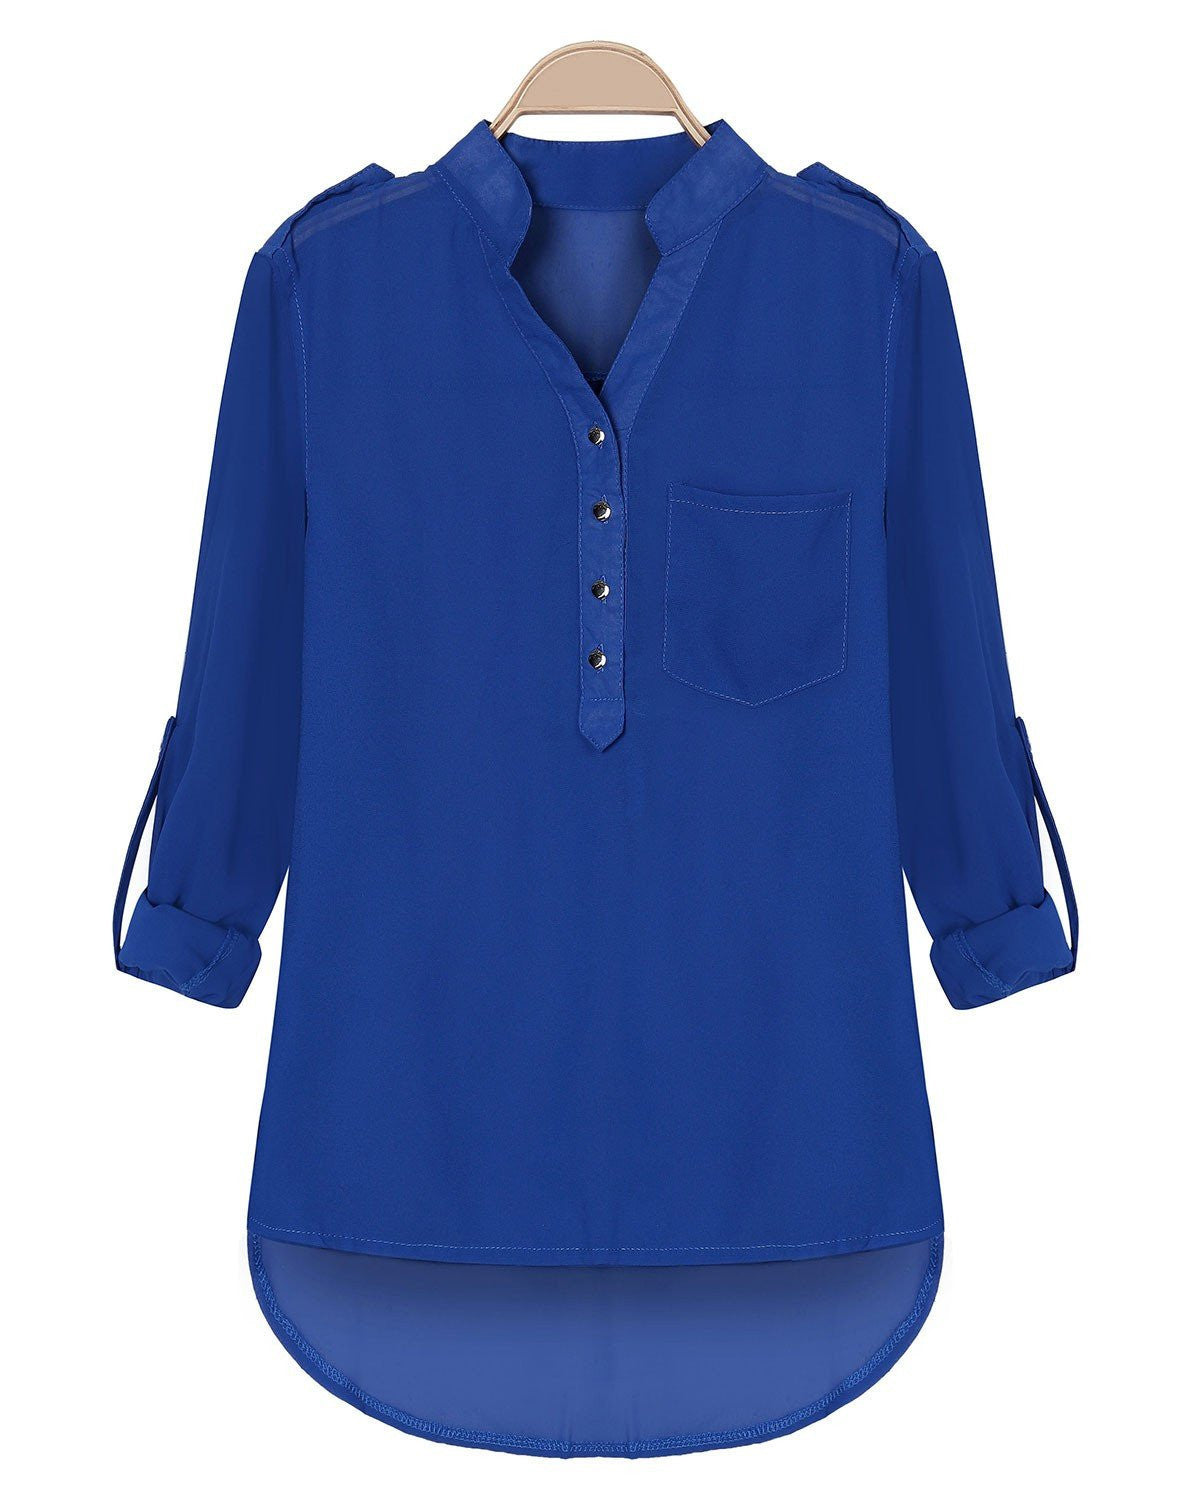 Zanzea Women Tops Casual Chiffon Adjustable Sleeve V-neck Blouses Shirts S-5XL 3 Colors